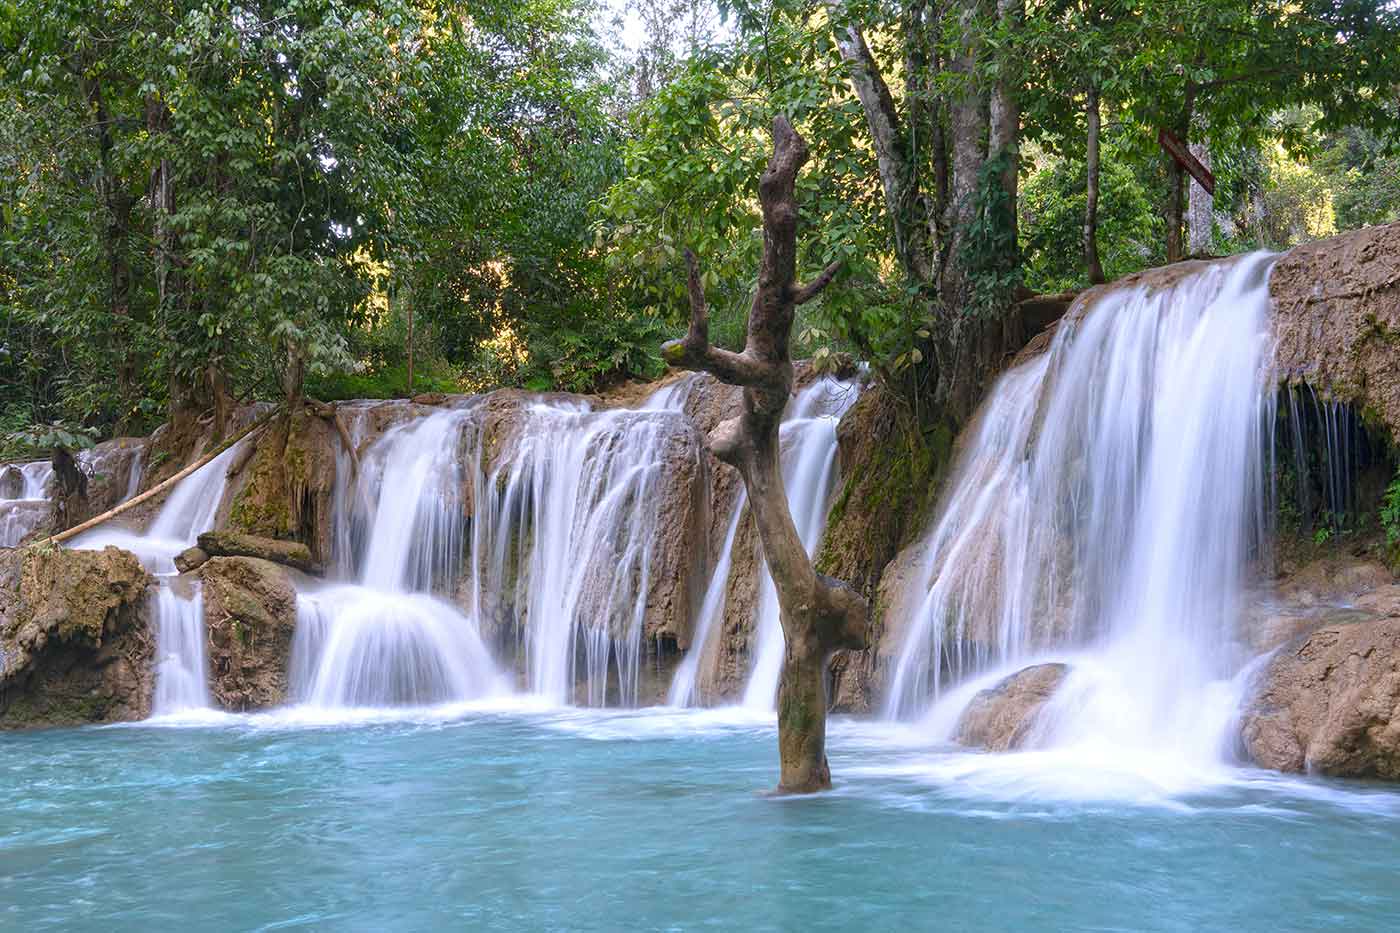 Tat Sae Waterfall